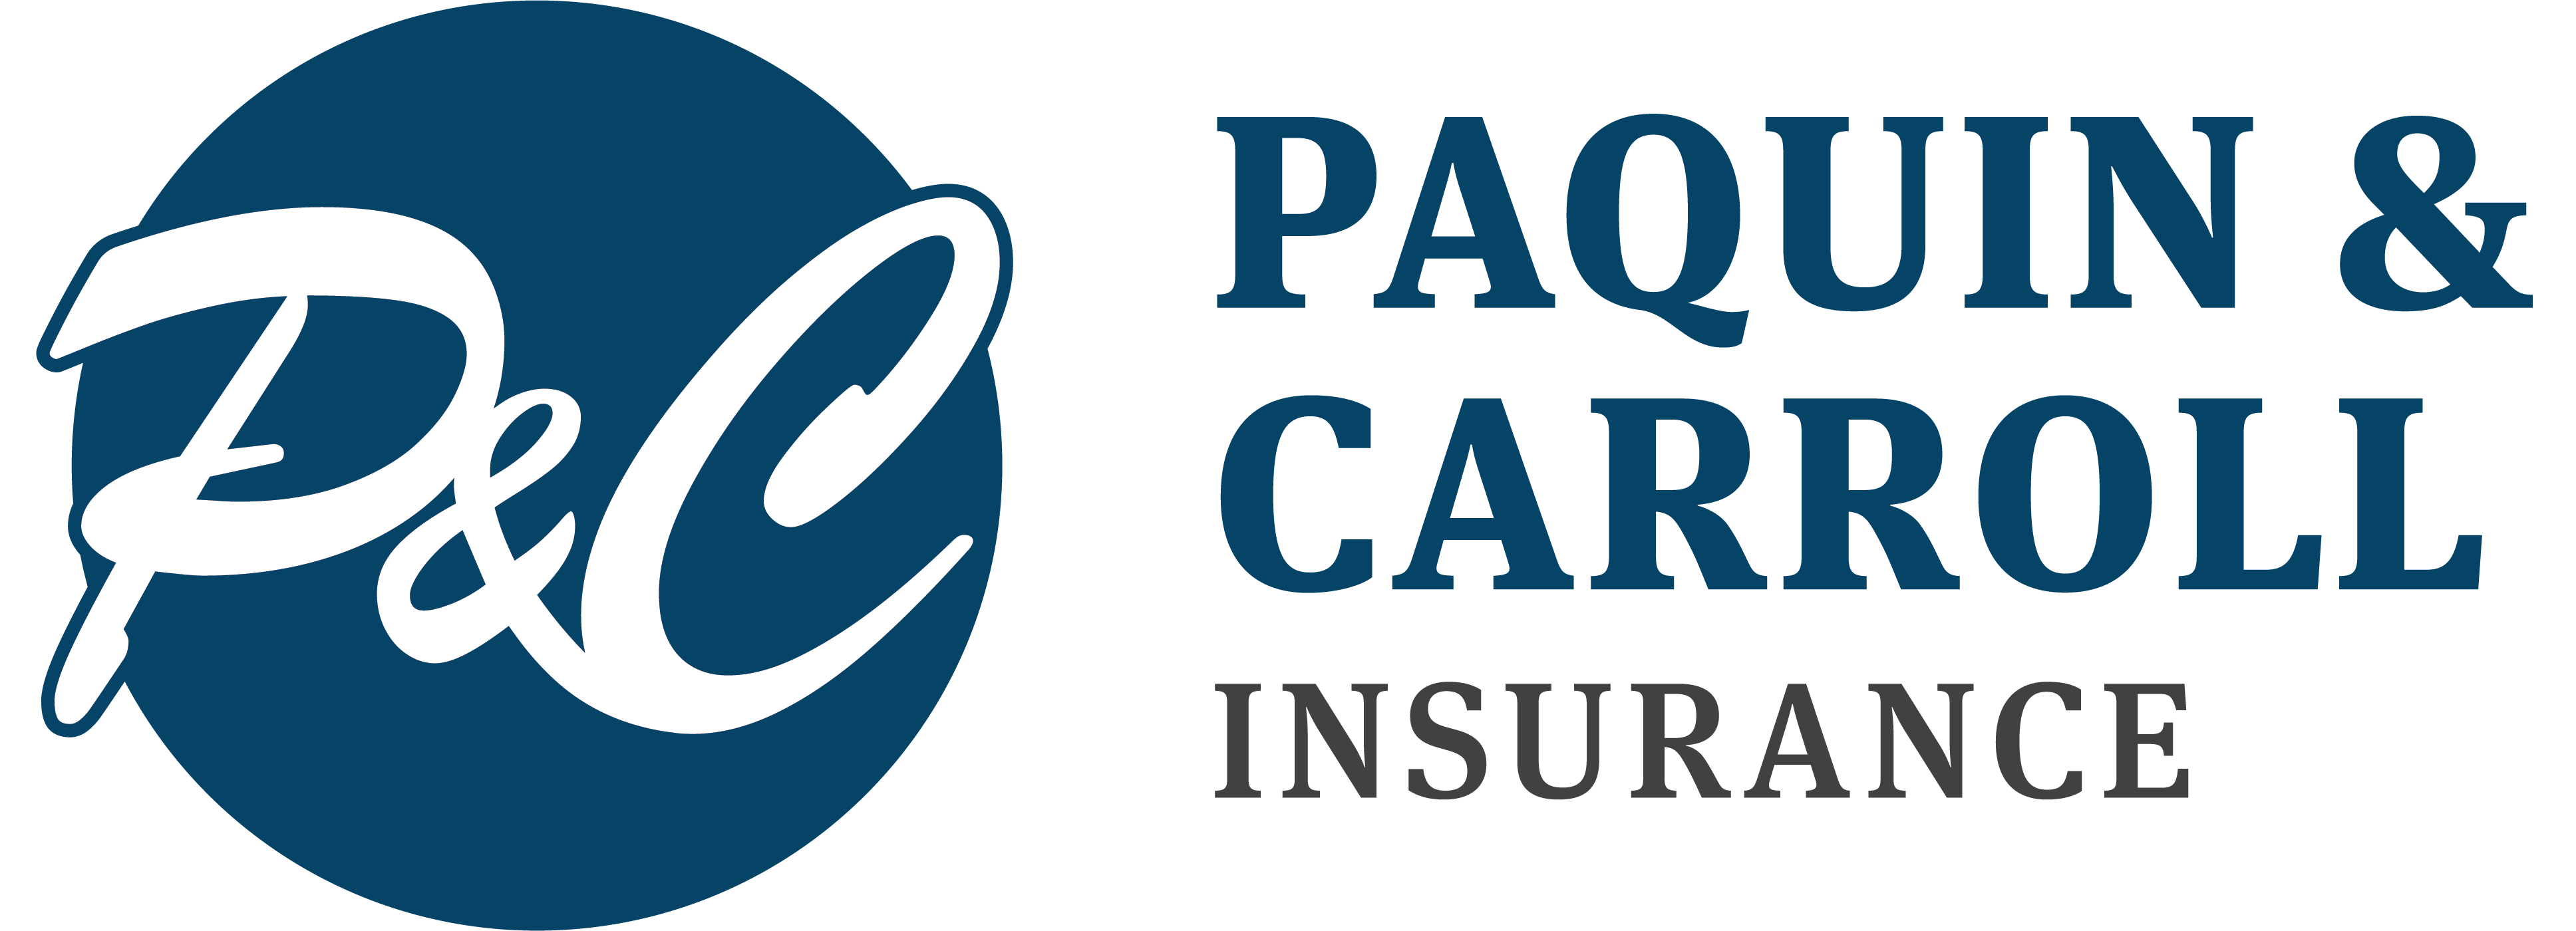 PC insurance logo